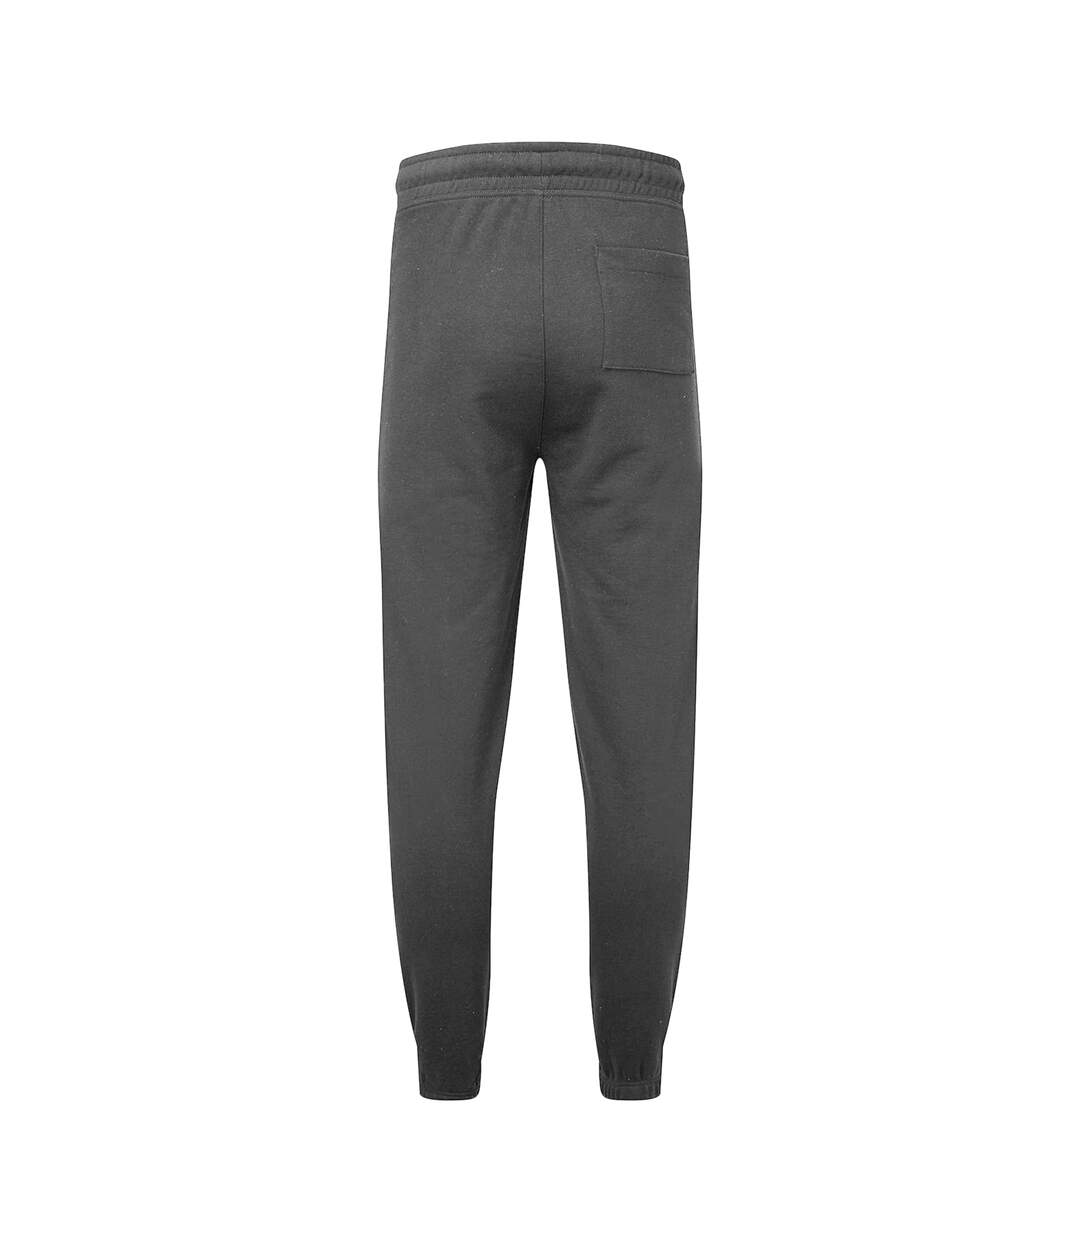 TriDri - Pantalon de jogging - Homme (Anthracite) - UTRW8200